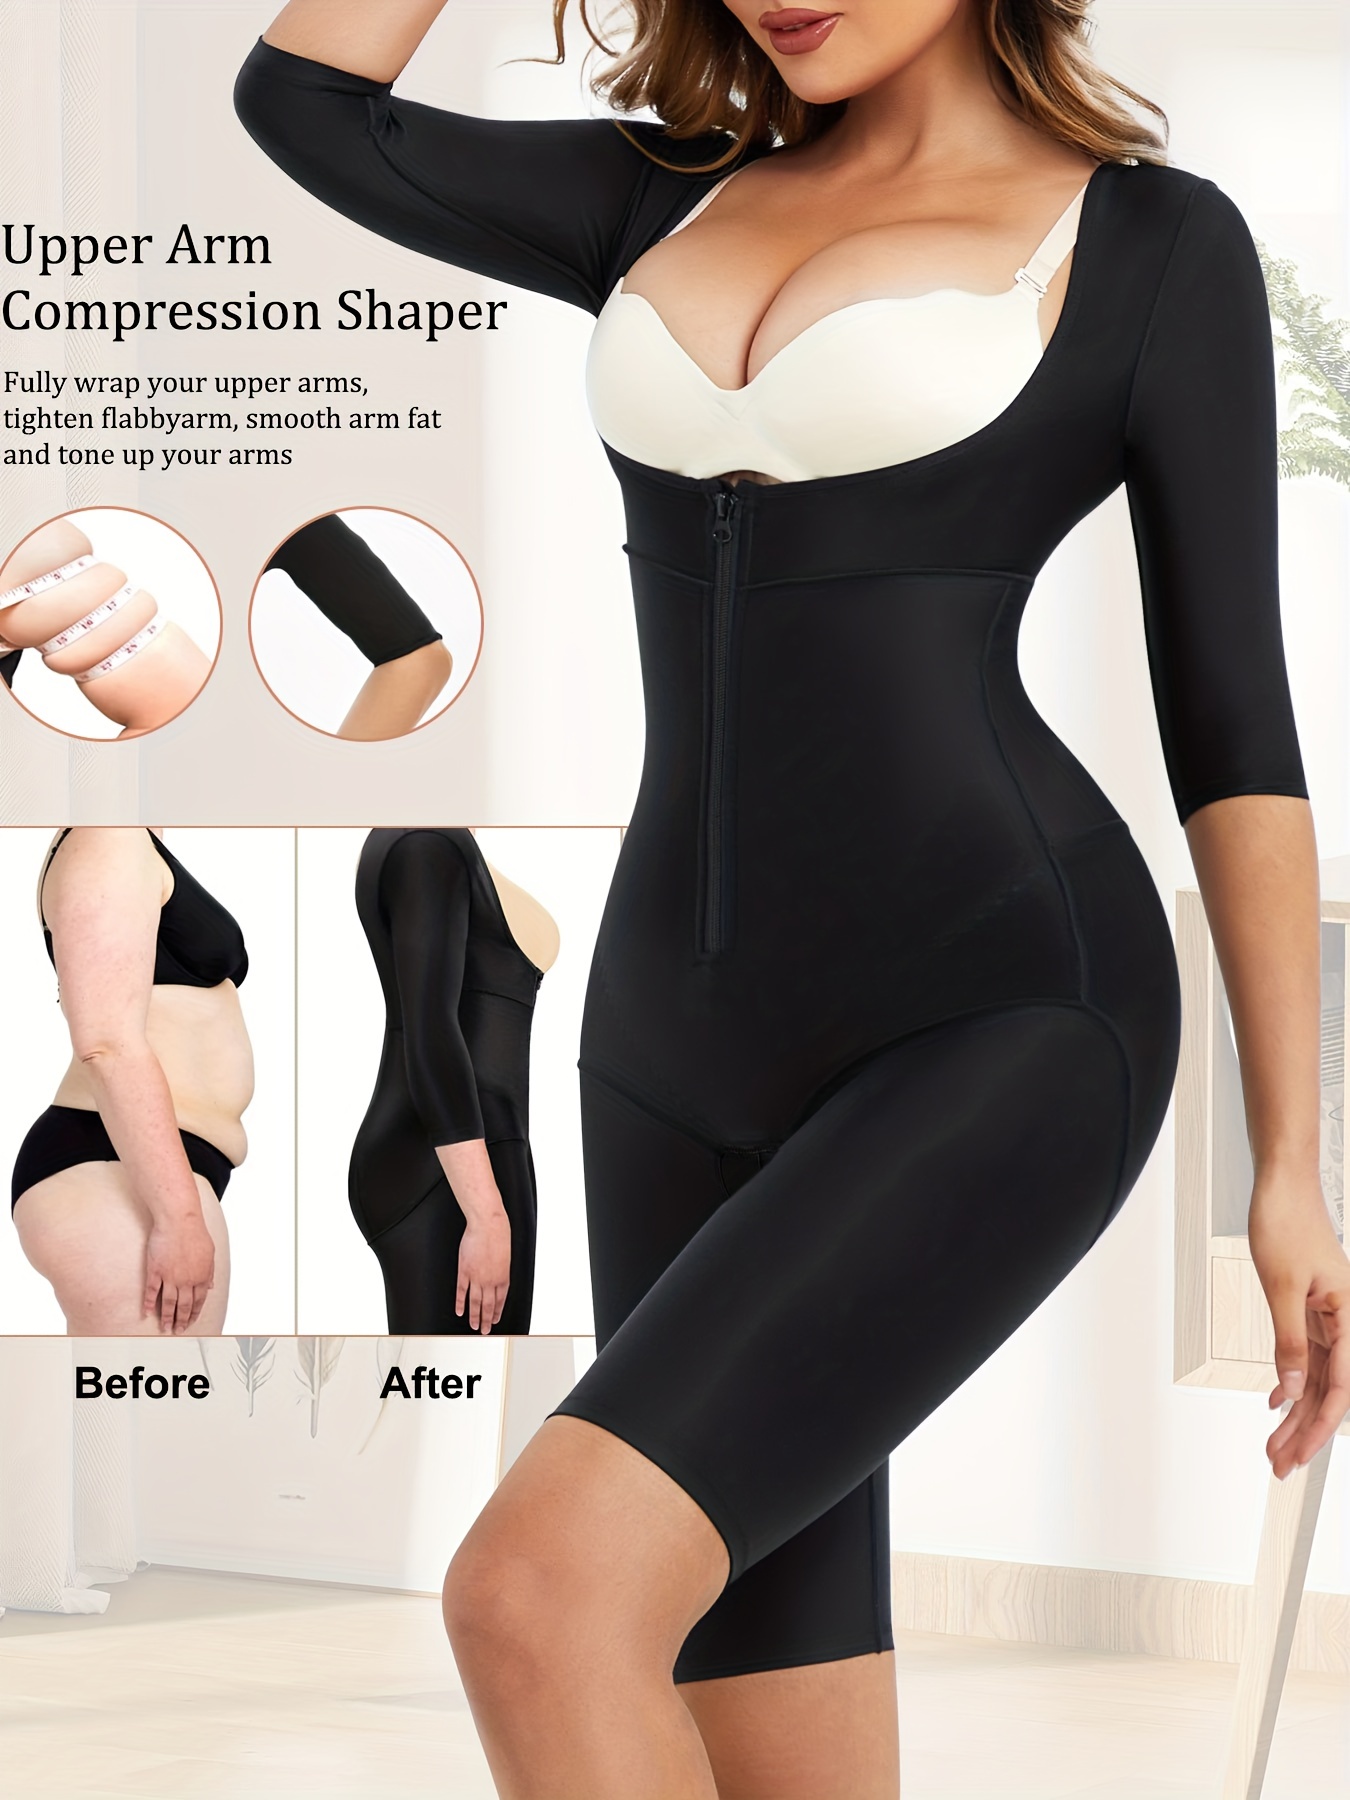 Buy Women Shaper Tummy Control Butt Lifting Open Crotch Zipper Body Shaper  Shapewear Bodysuit Slimmer -MAIOO at